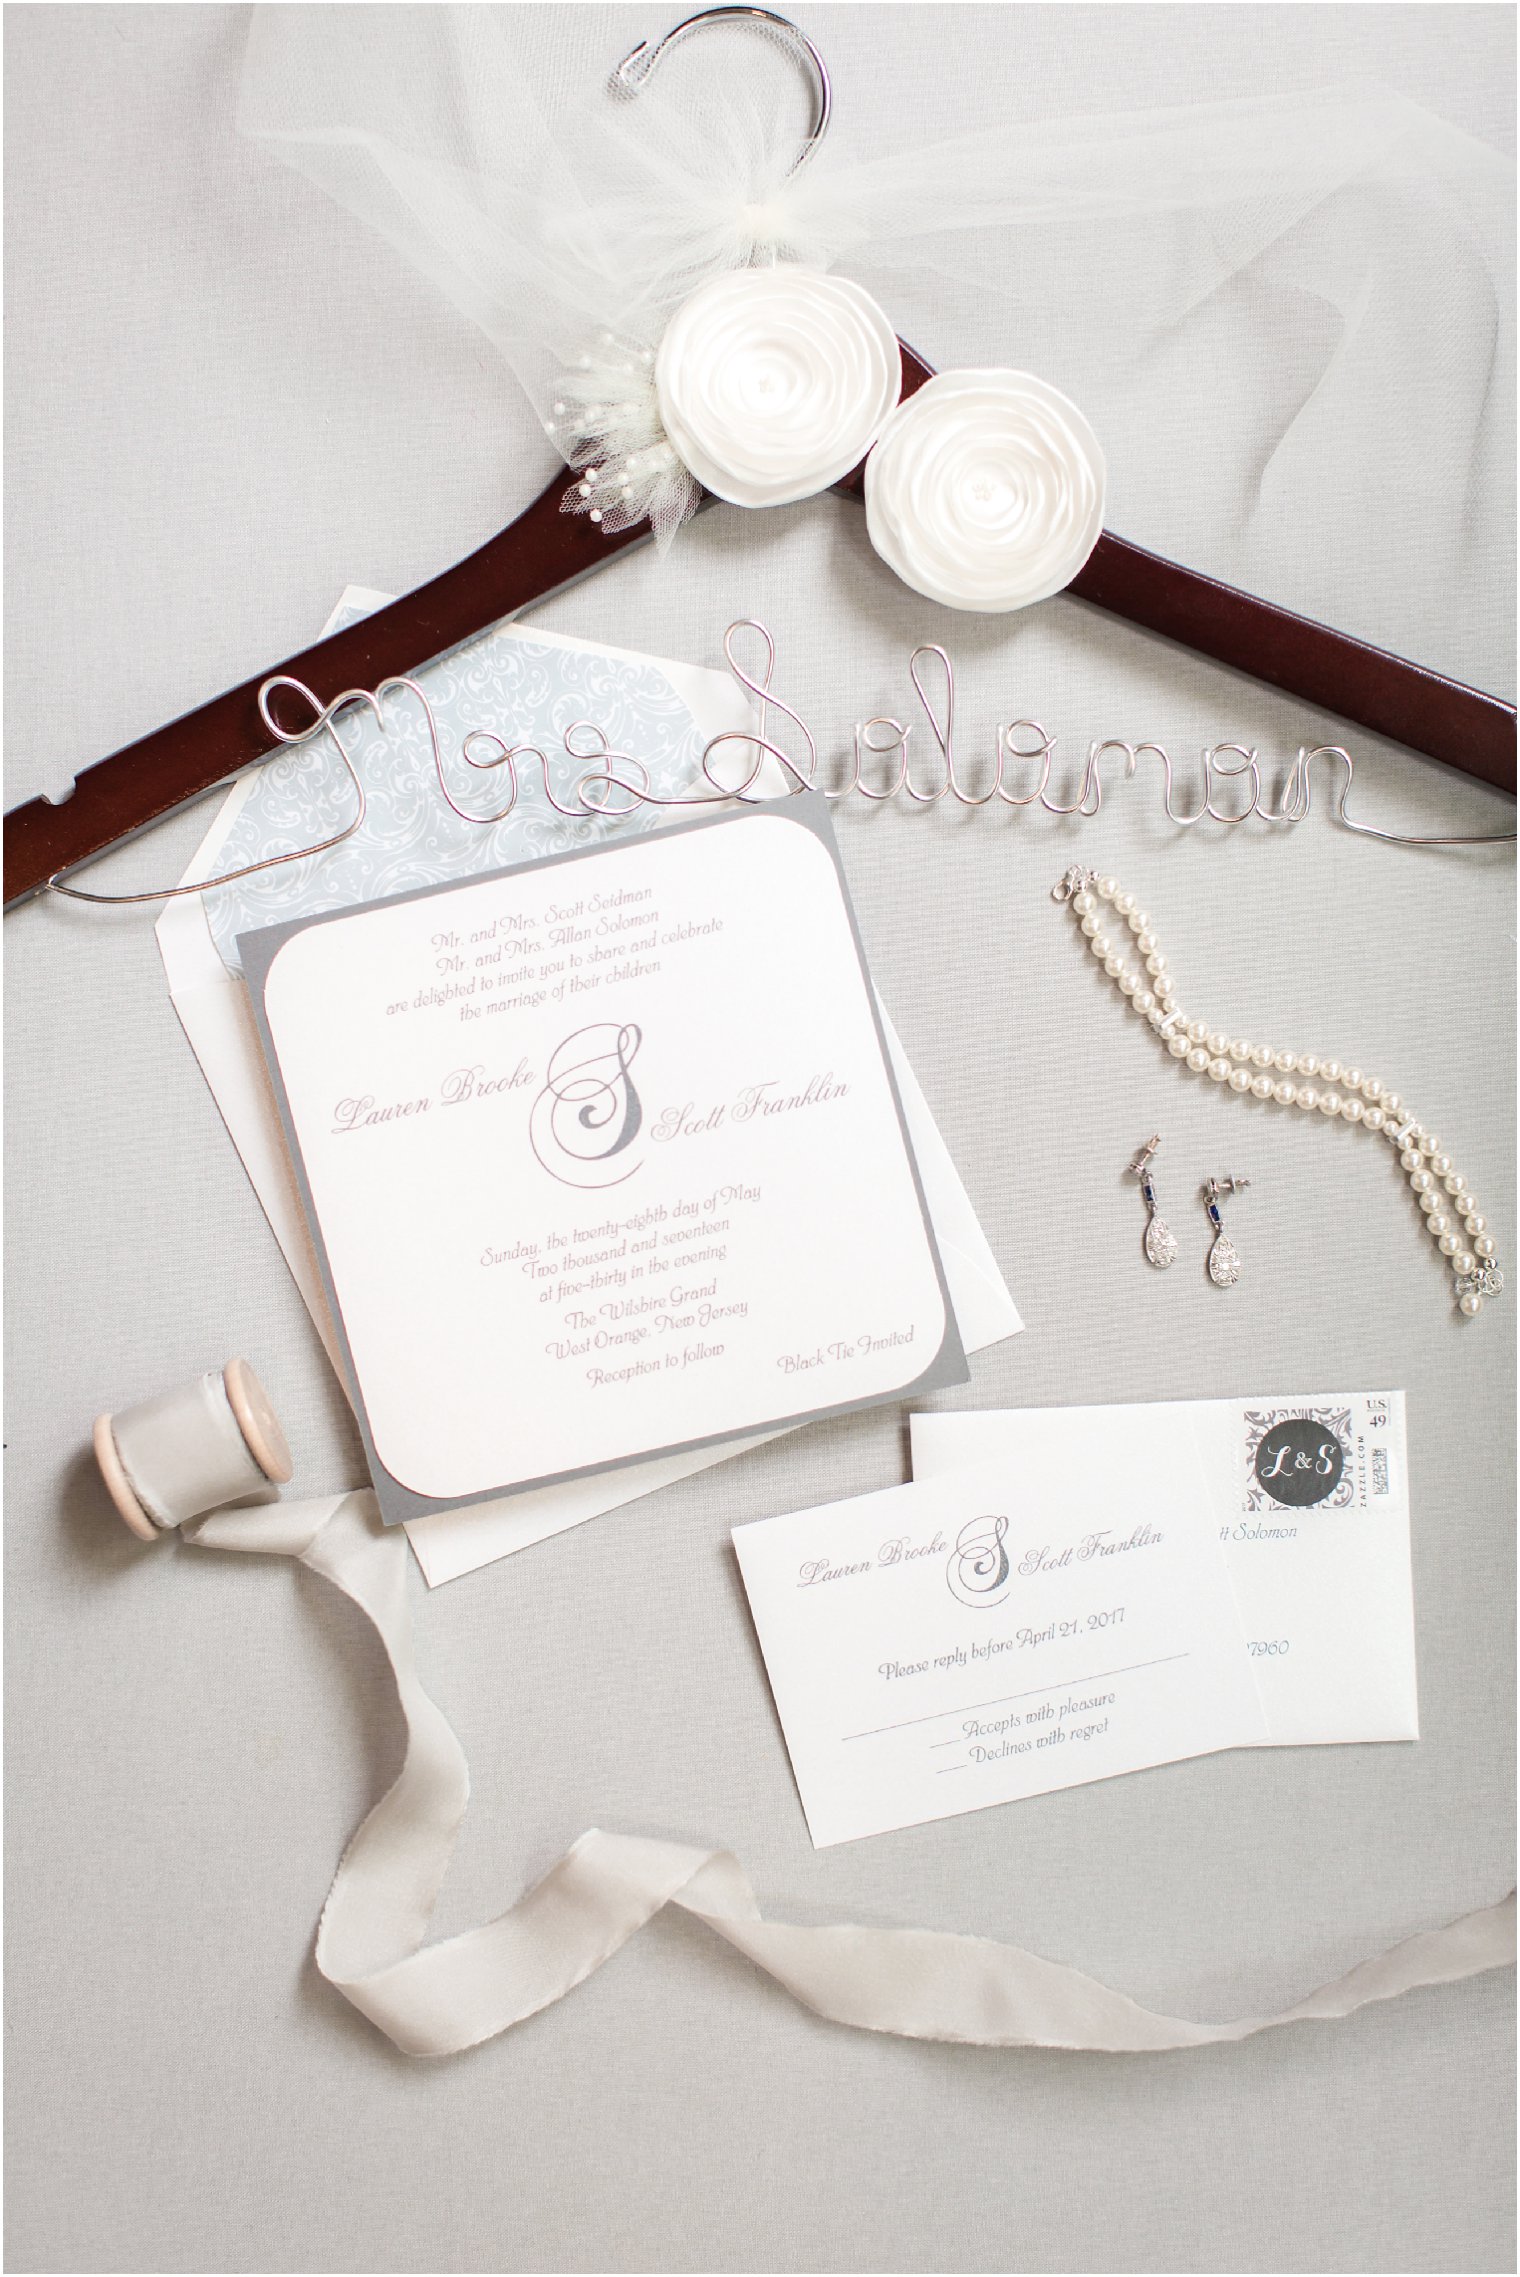 Custom hanger and wedding invitations | Photos by Idalia Photography